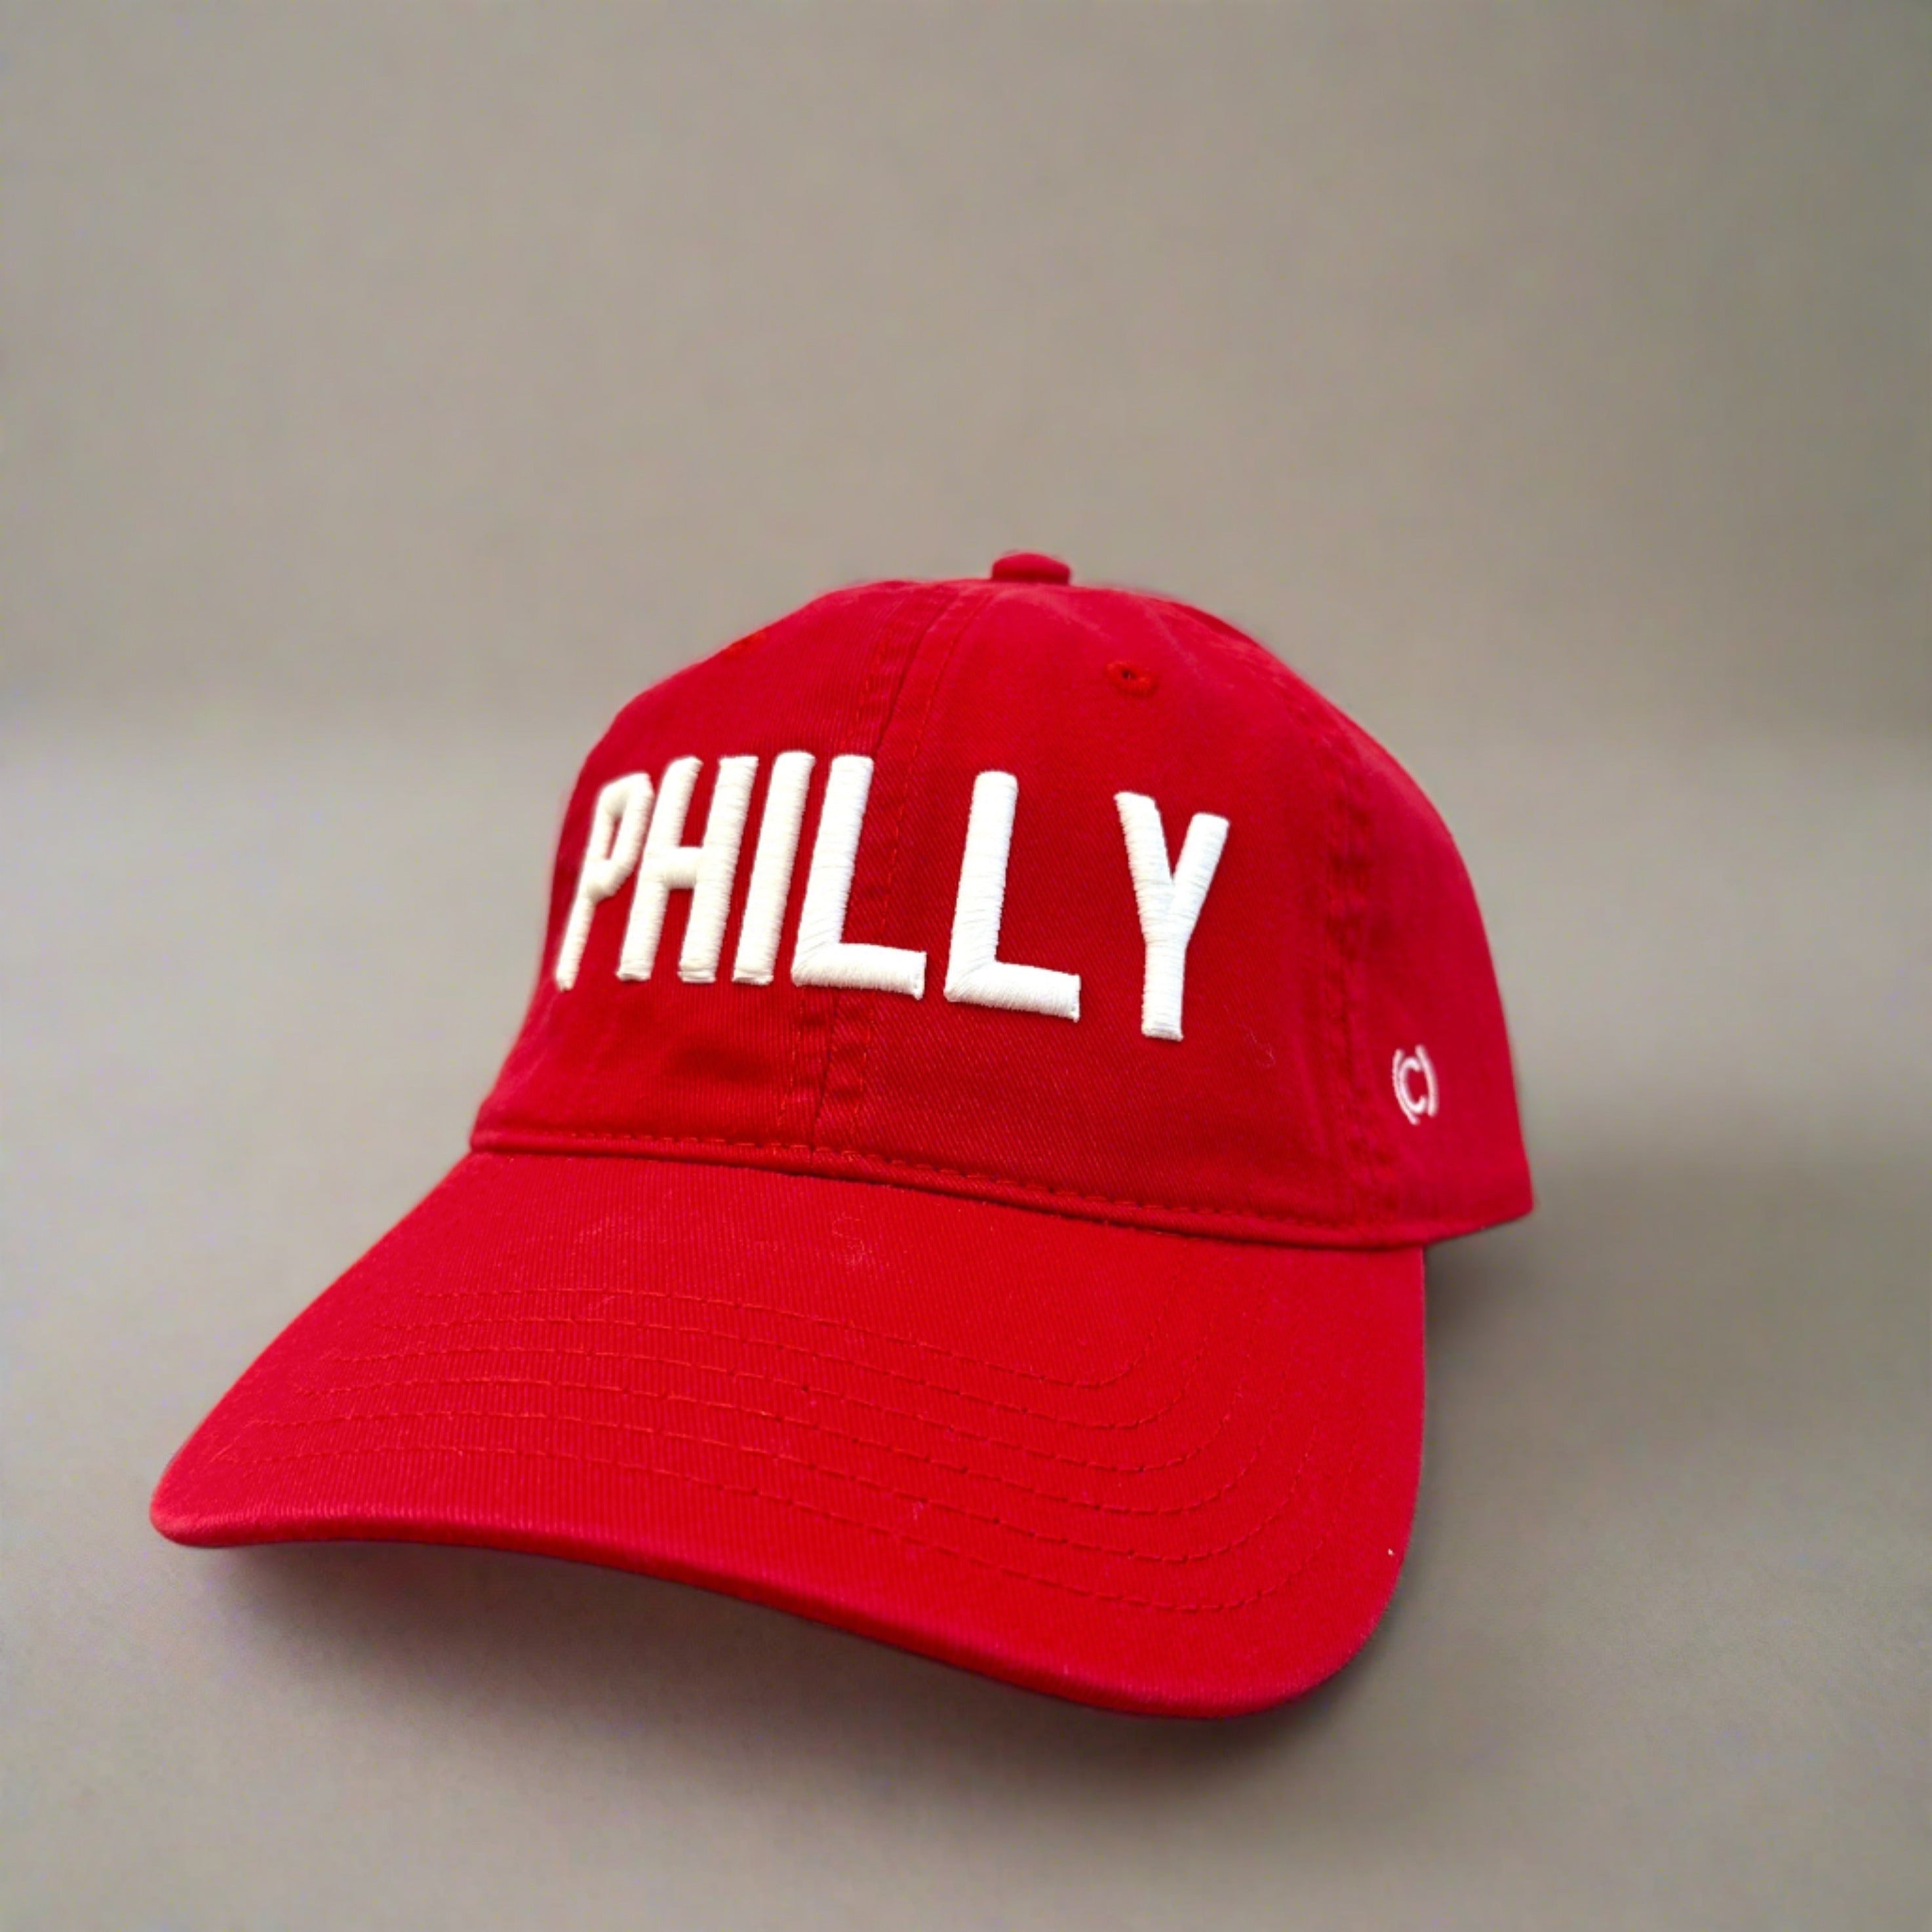 Philly Cotton Baseball Cap